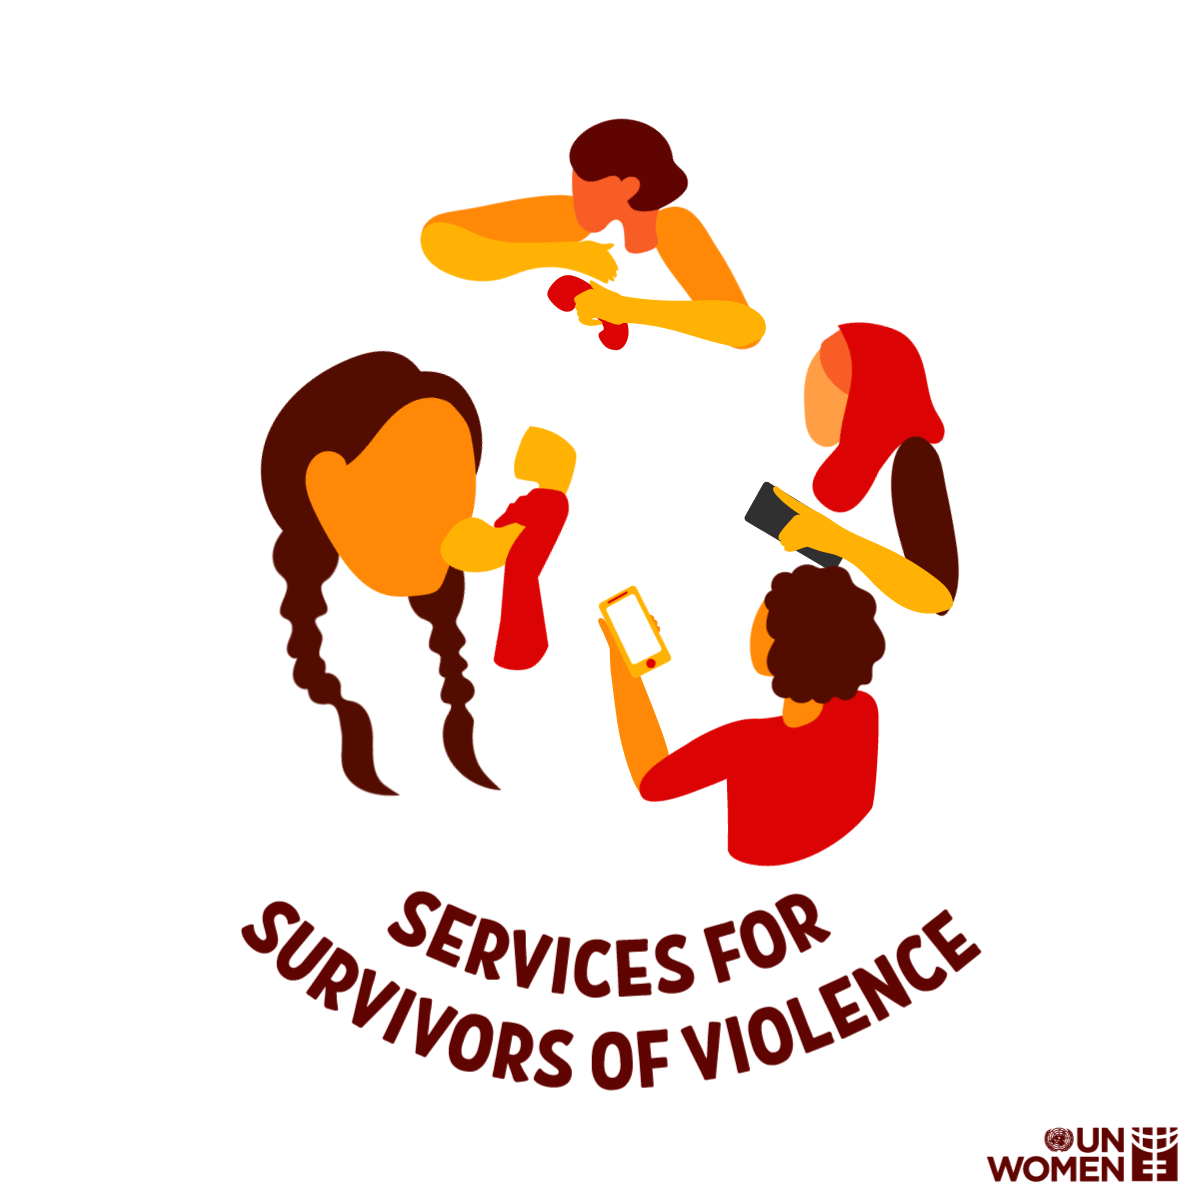 Services for survivors of violence